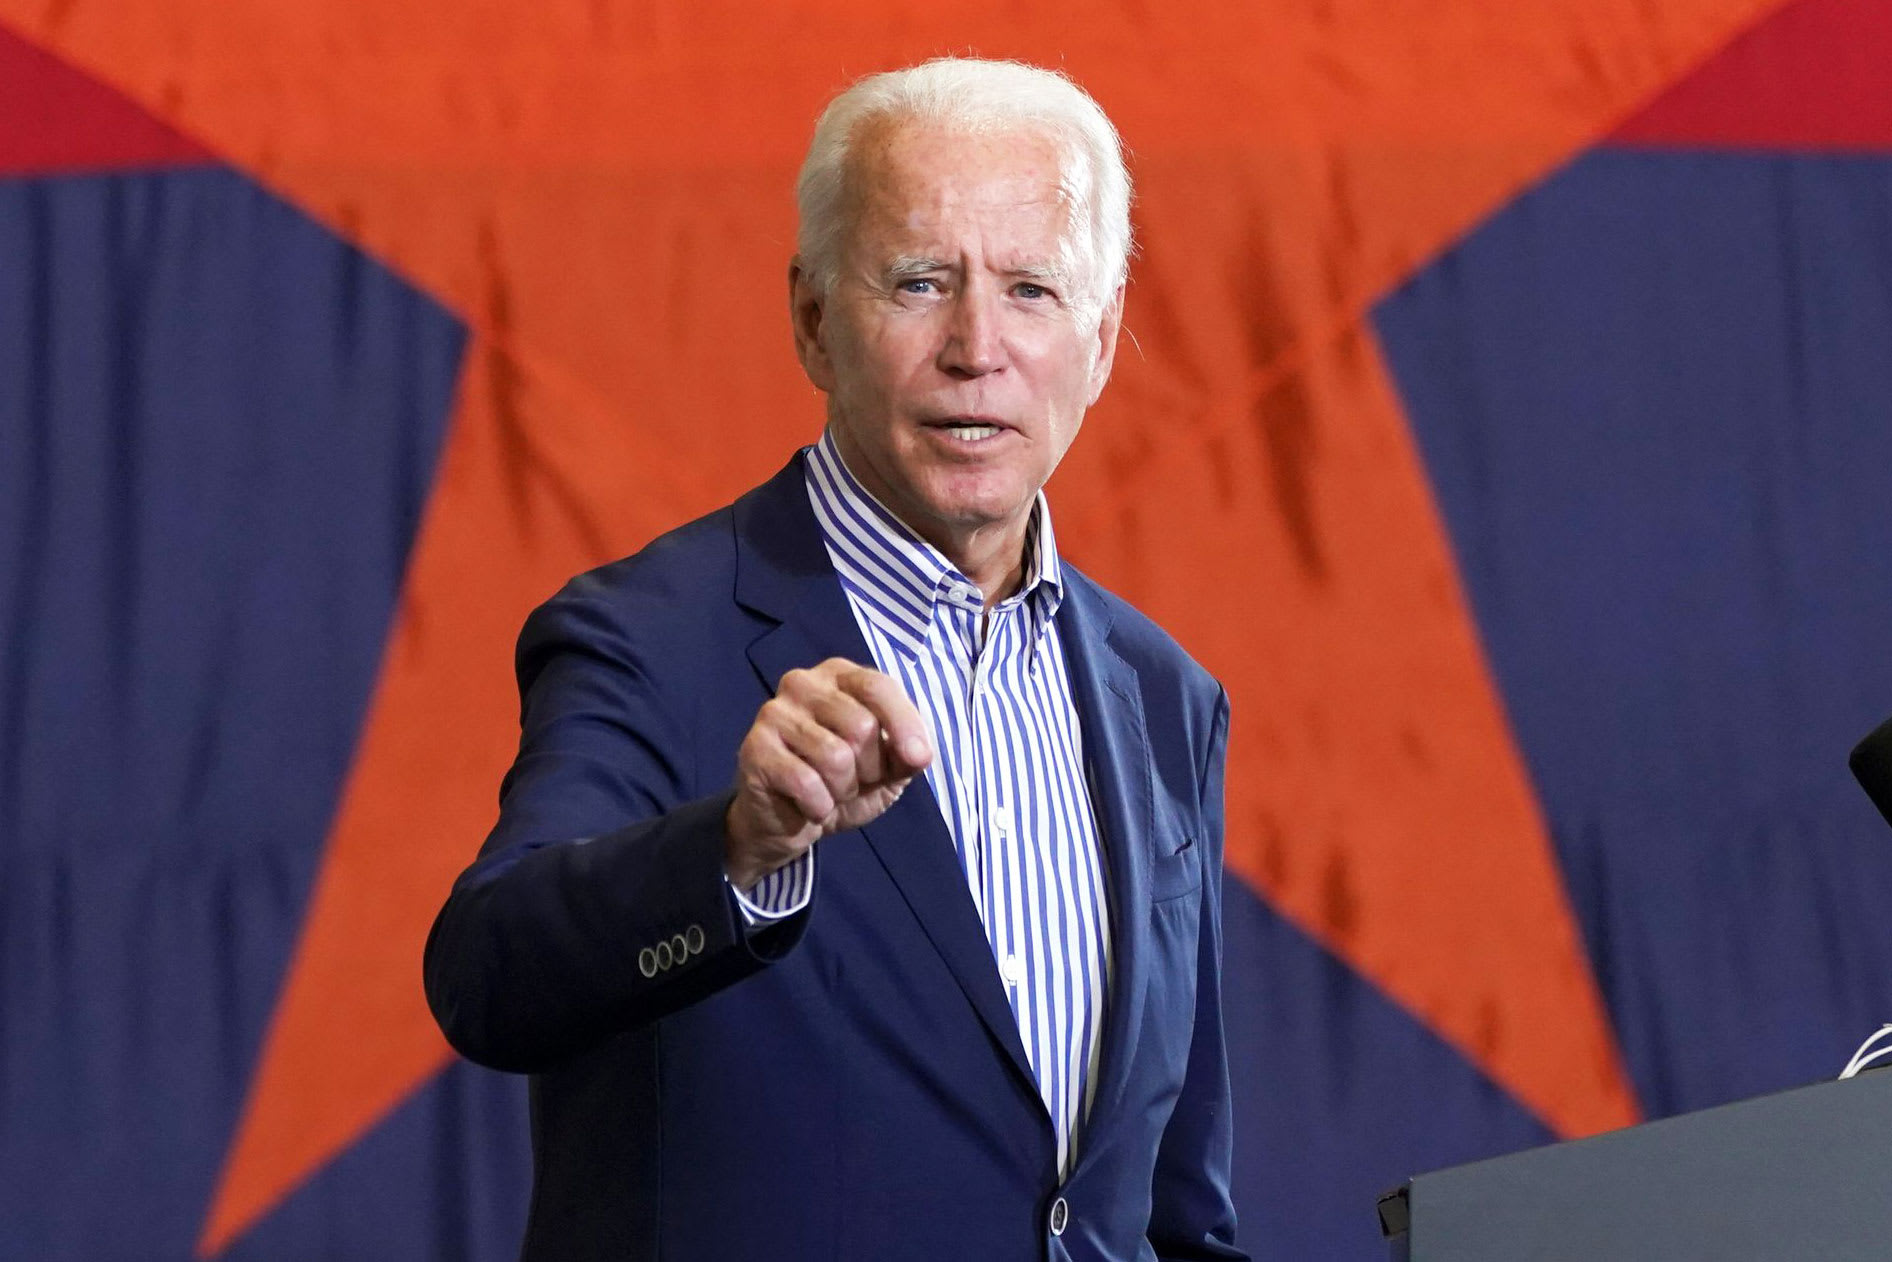 Joe Biden has spent $500 million on ads this year as he seeks the presidency